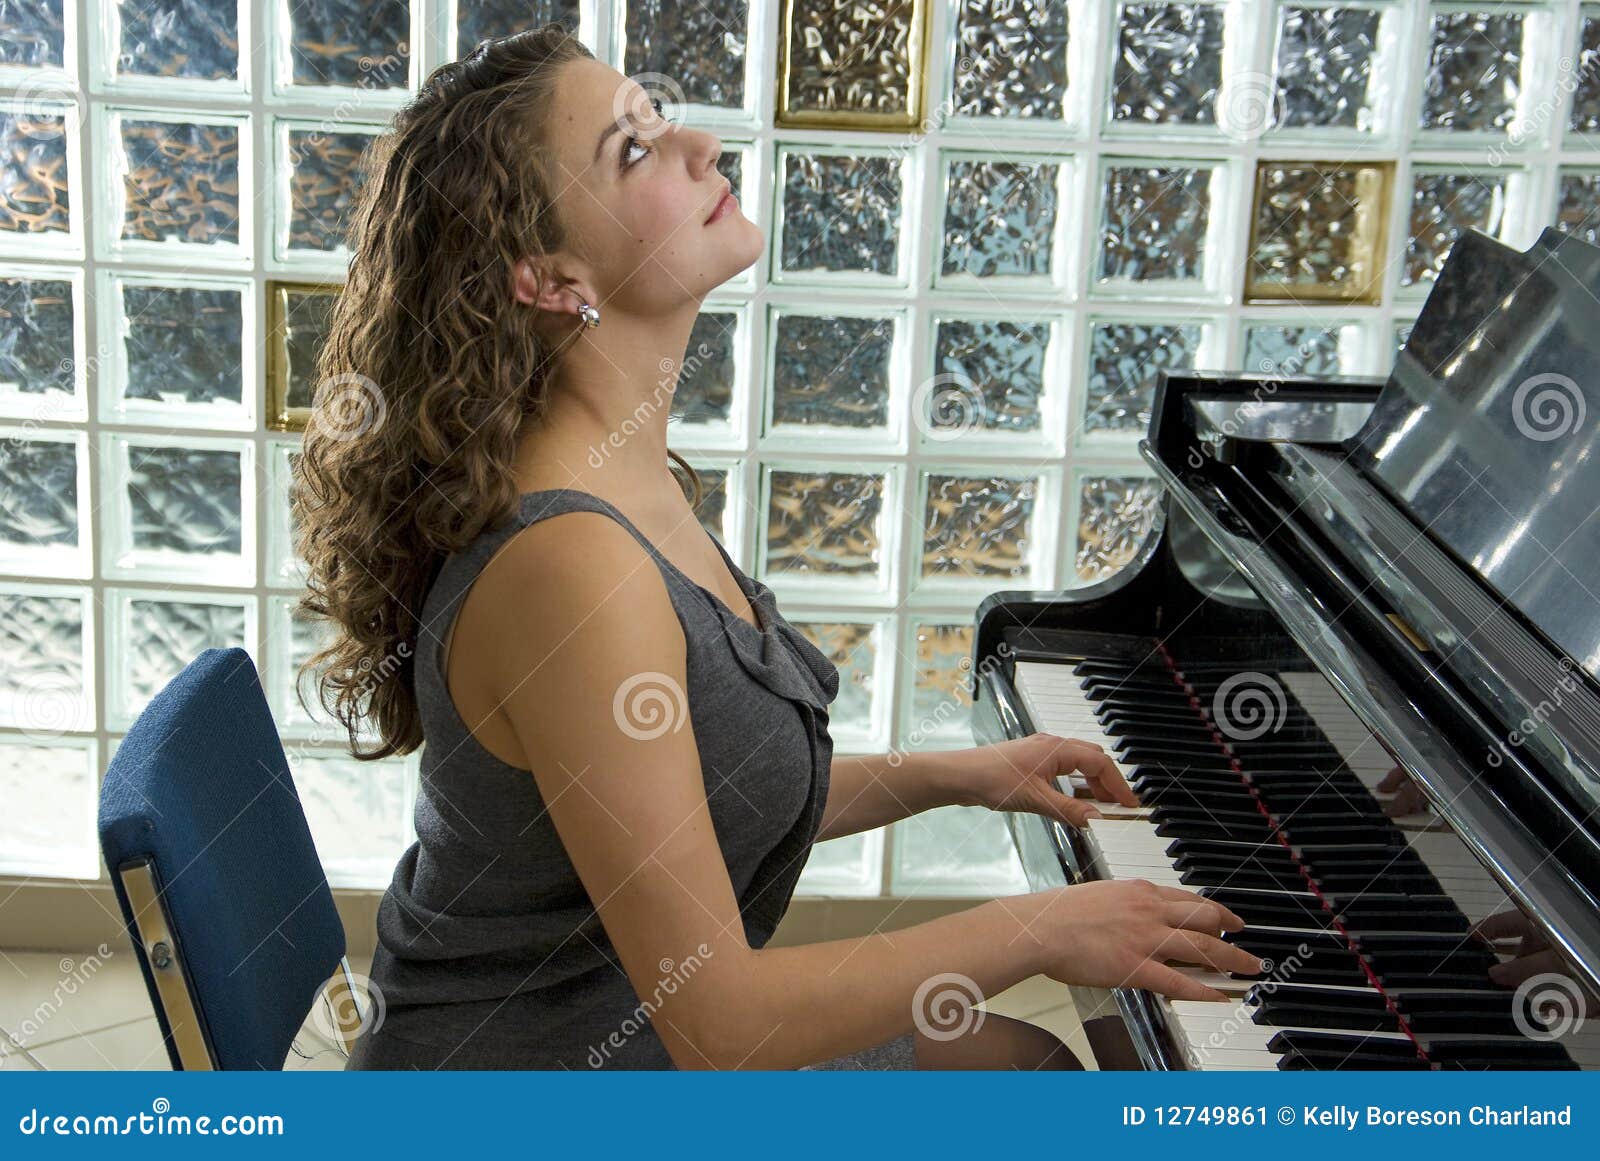 About Beautiful Woman Solo Piano 11